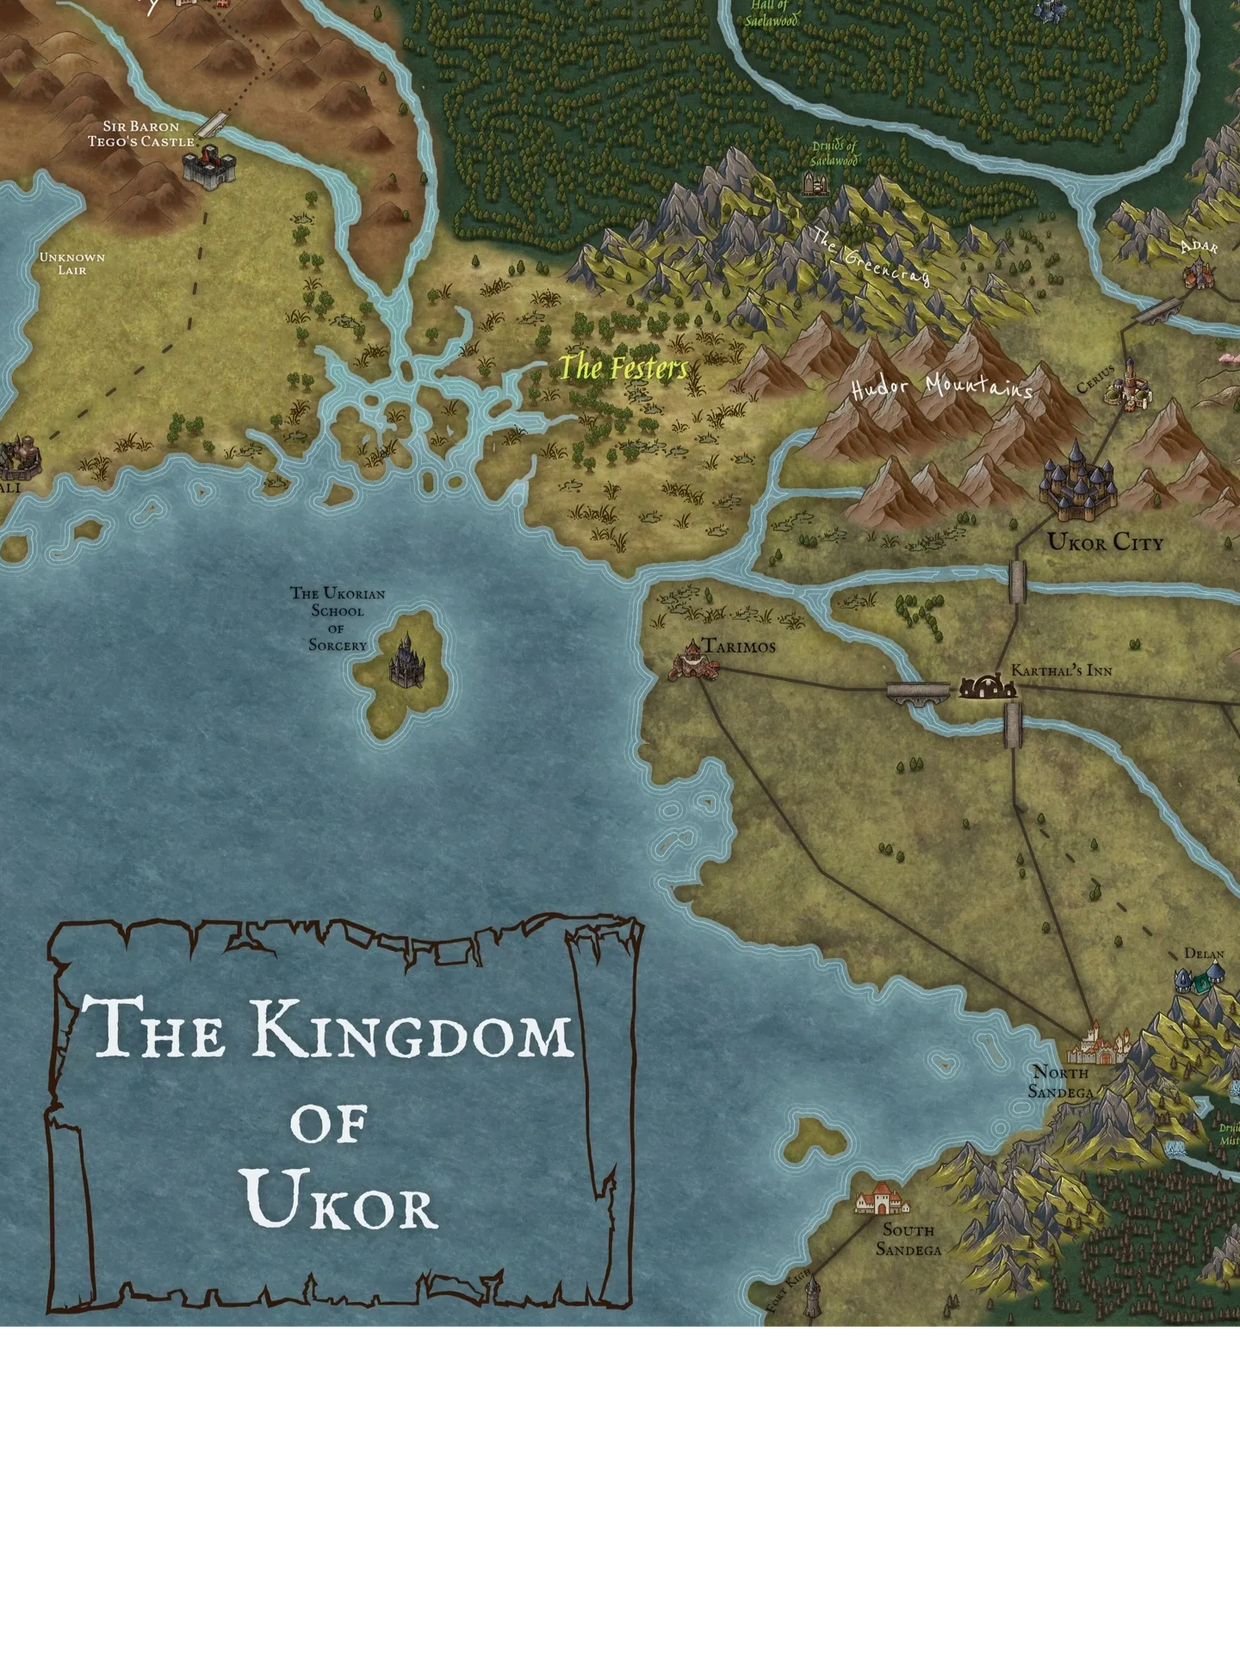 Enemier's central kingdom of Ukor (created via Inkarnate mapmaker)